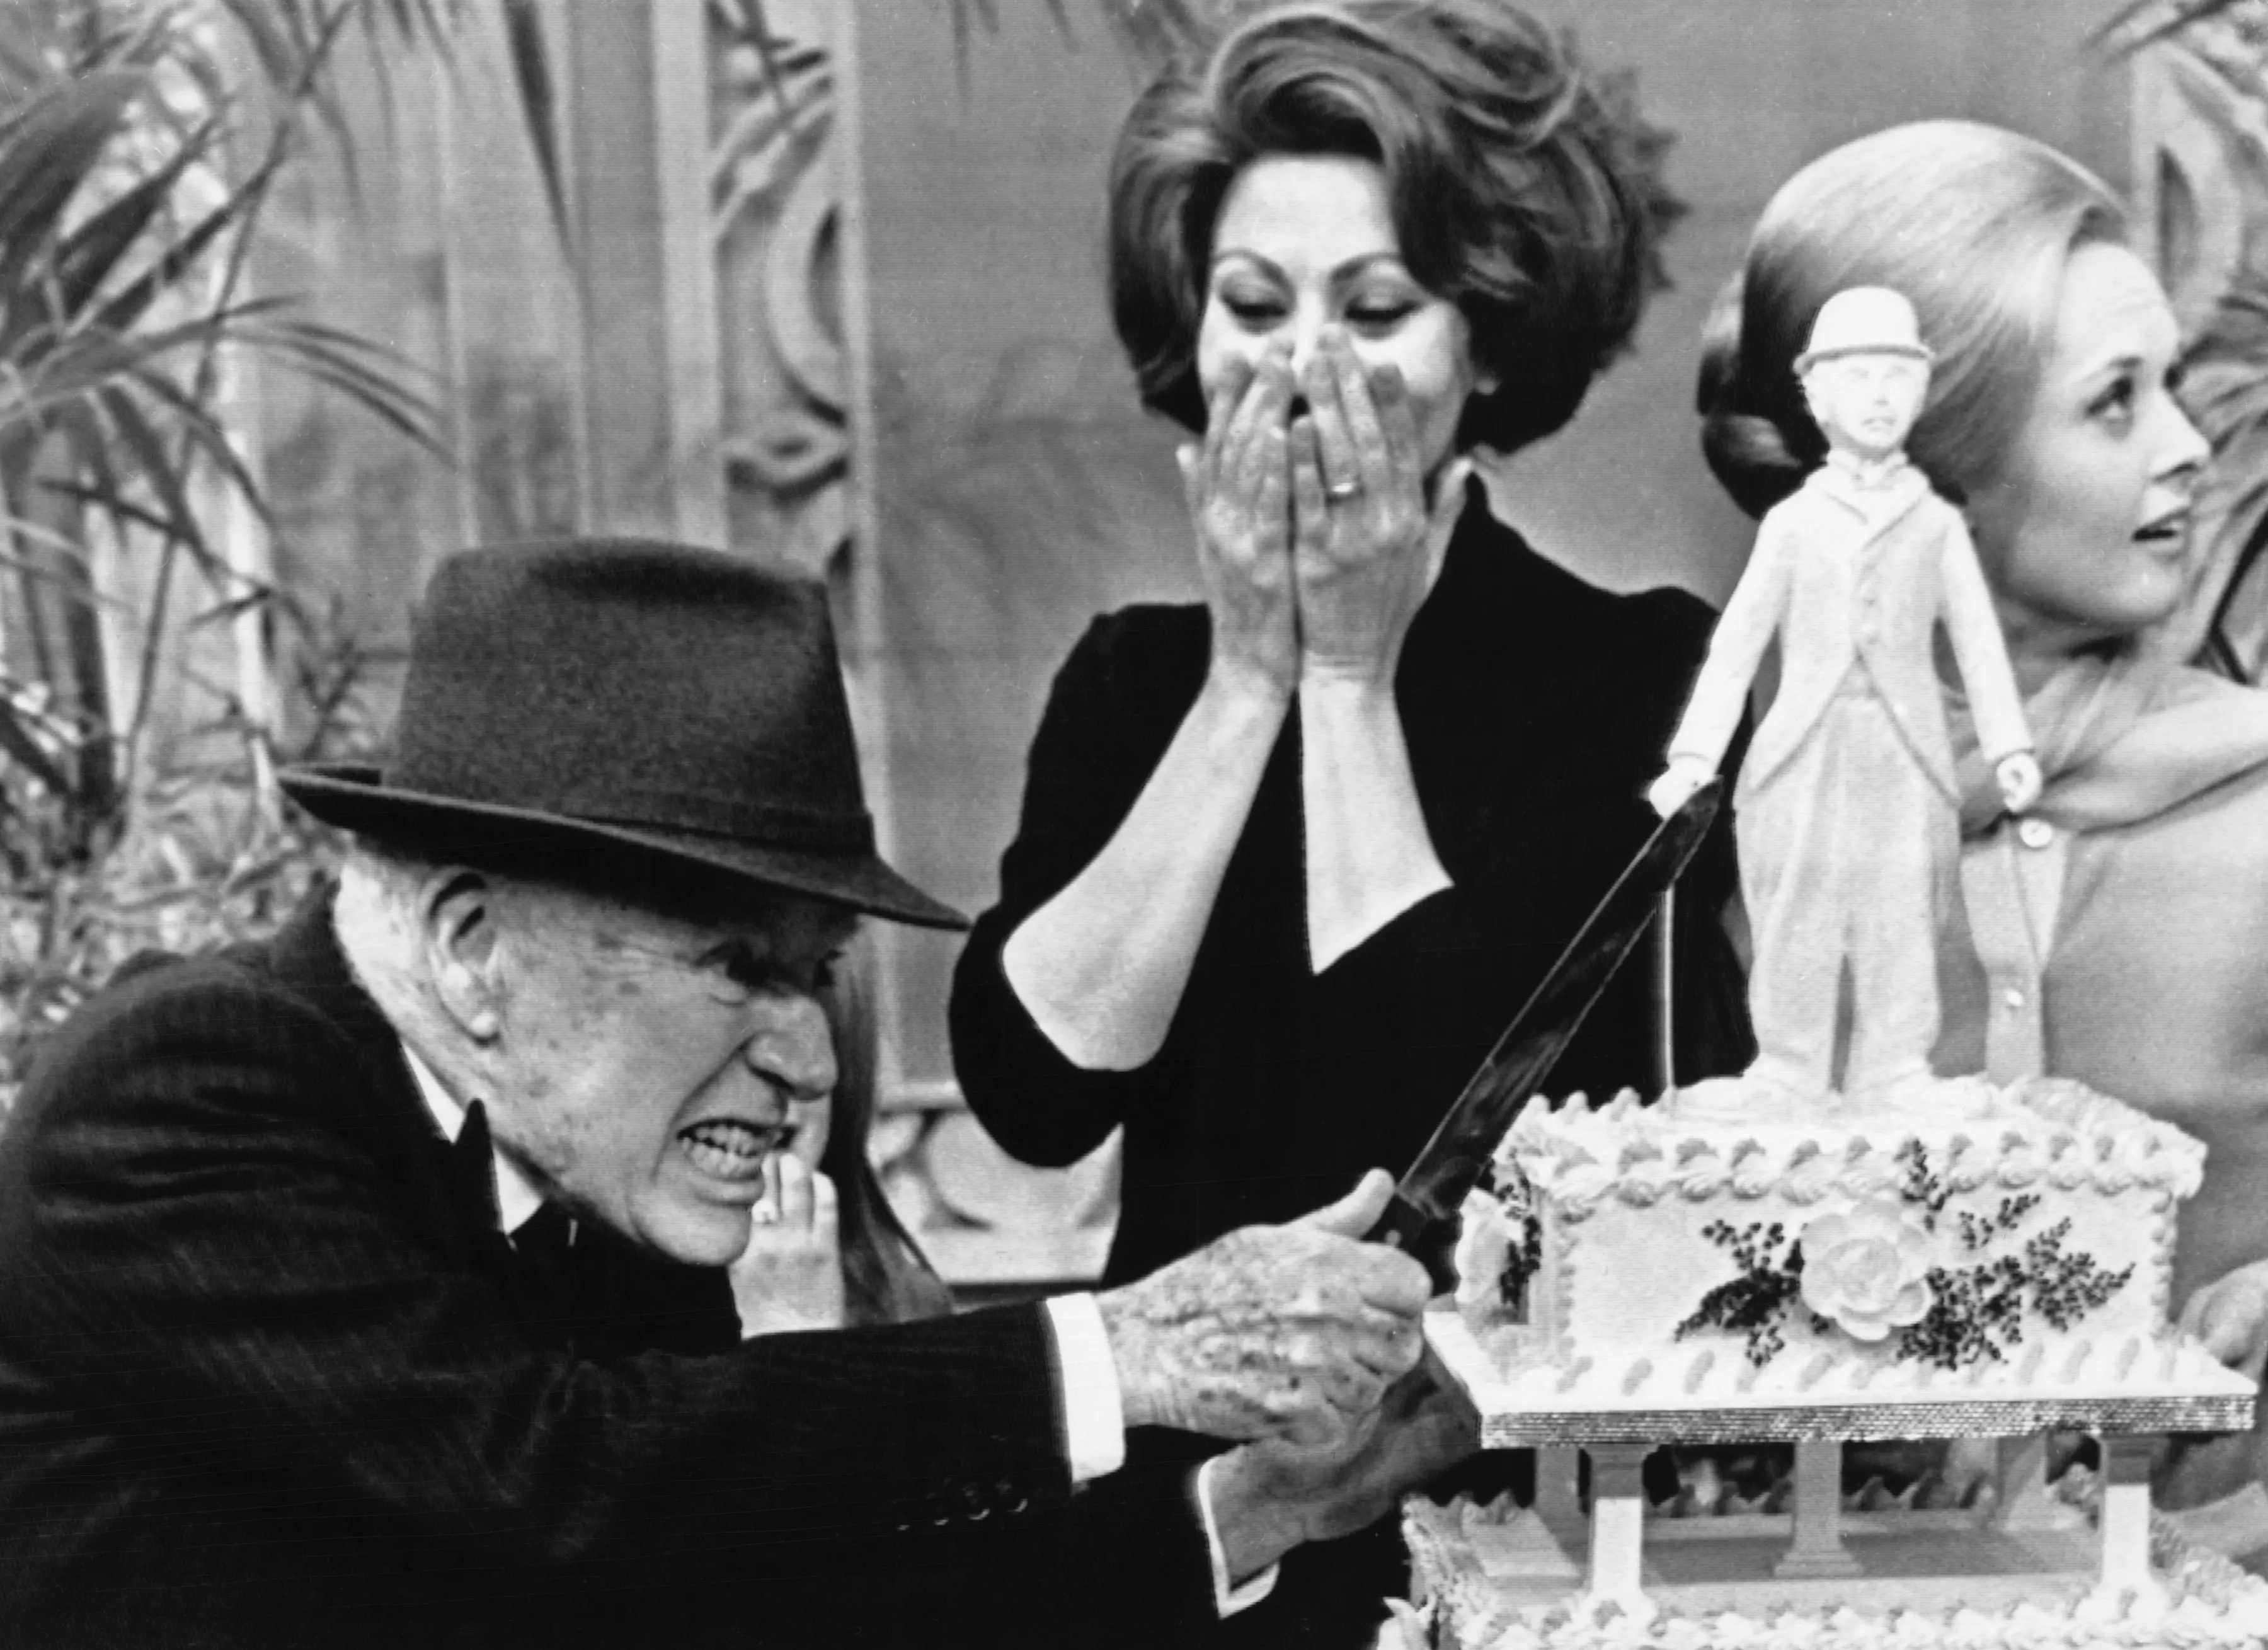 Charlie Chaplin attacks his birthday cake while Sophia Loren and Tippi Hedren watch